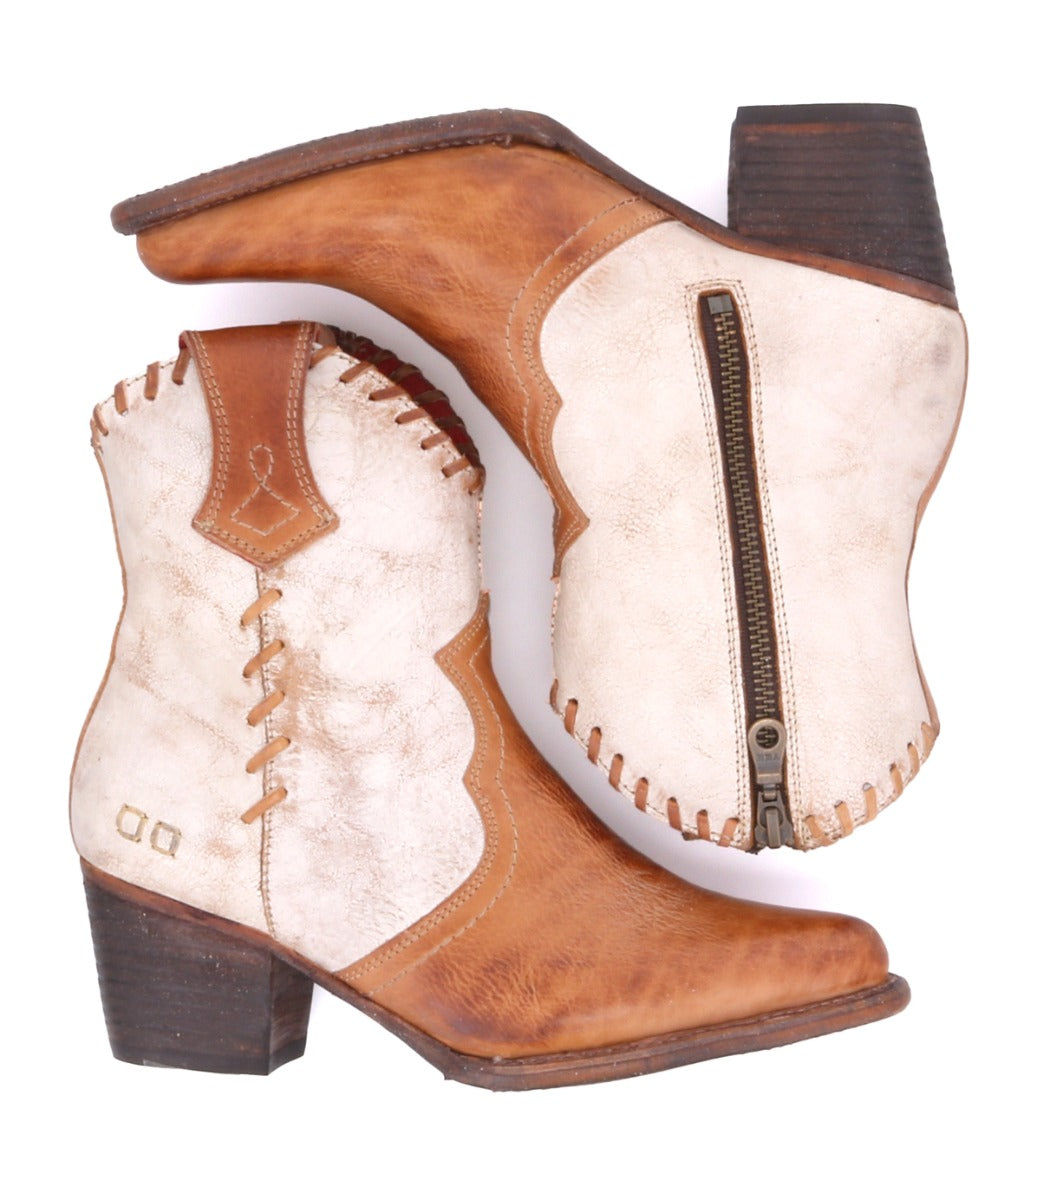 A pair of Bed Stu Baila II cowboy boots.